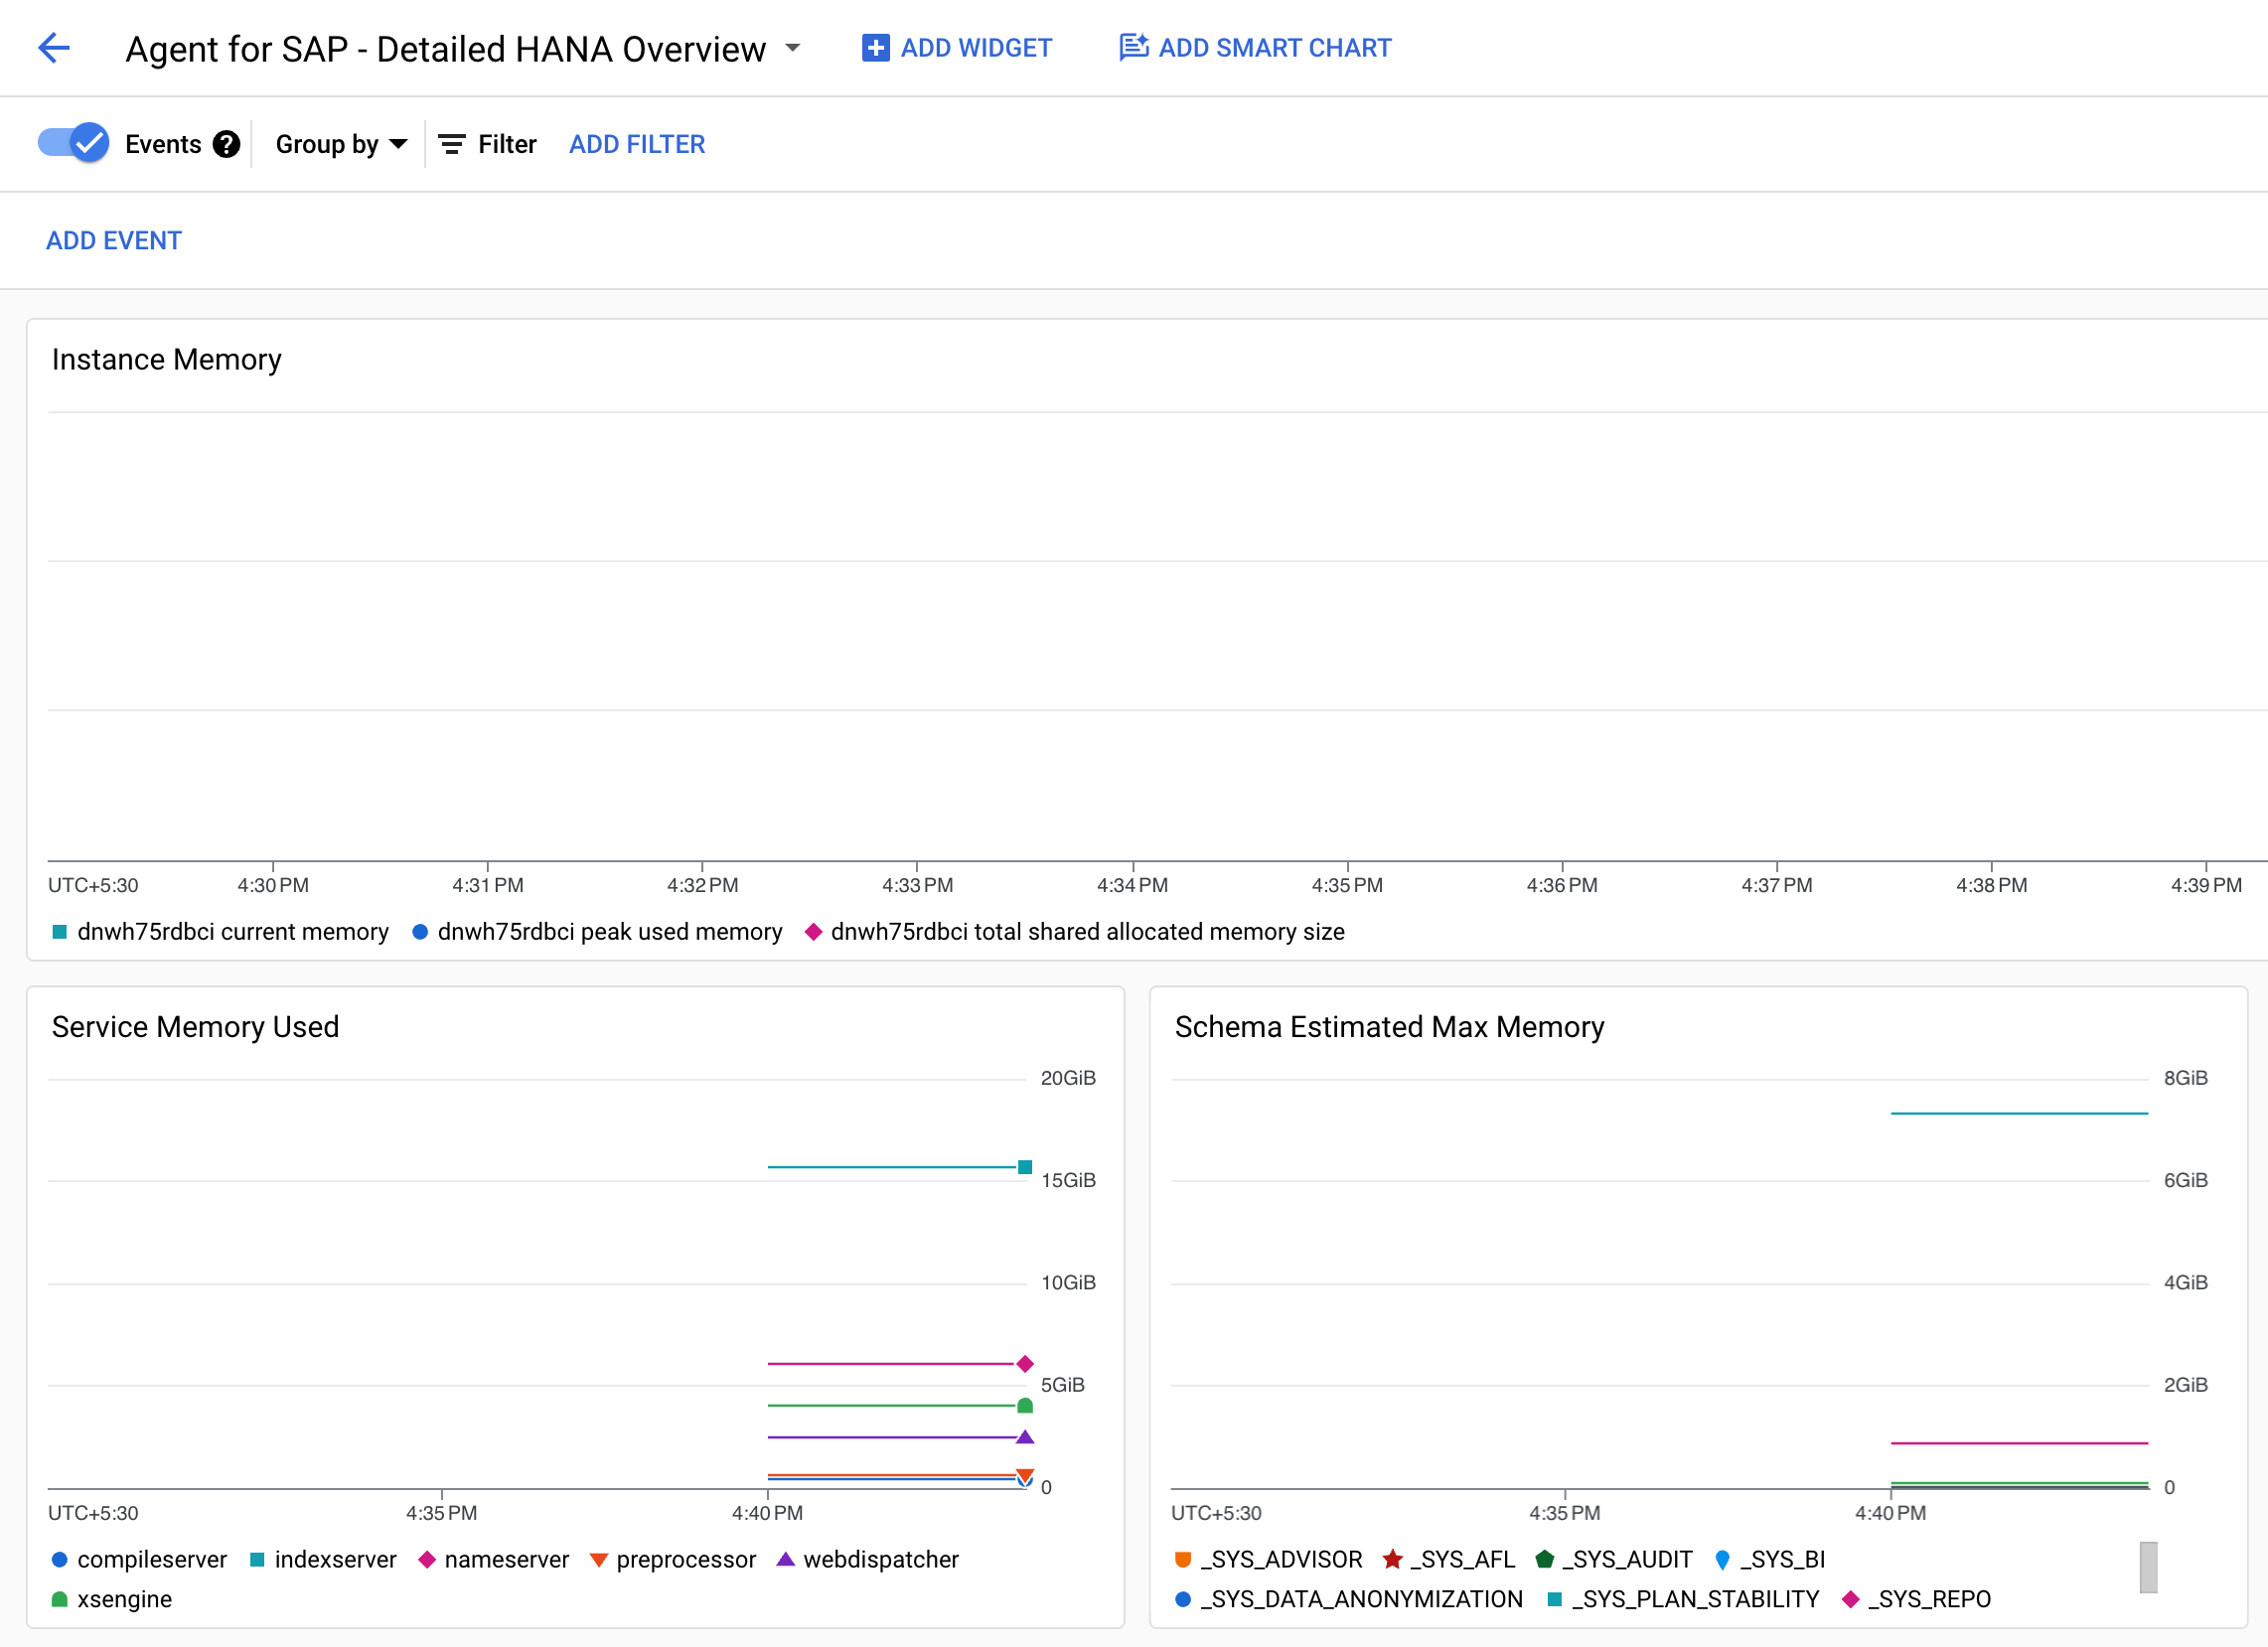 Screen capture shows the custom dashboard for SAP HANA metrics
in Monitoring